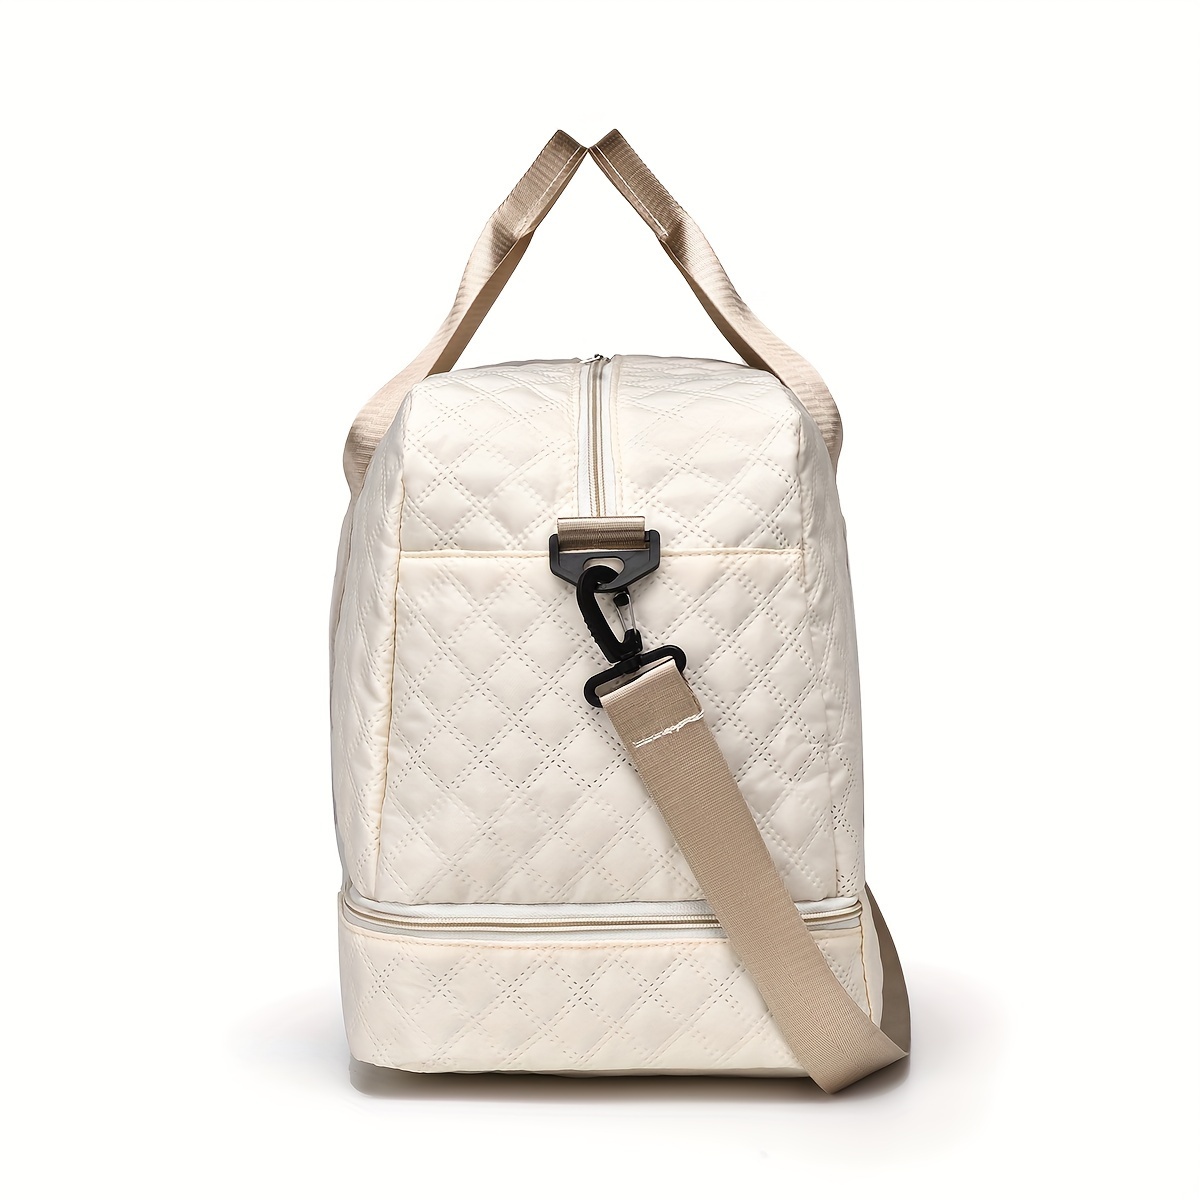 lightweight argyle pattern luggage bag large capacity travel duffle bag portable overnight bag details 25